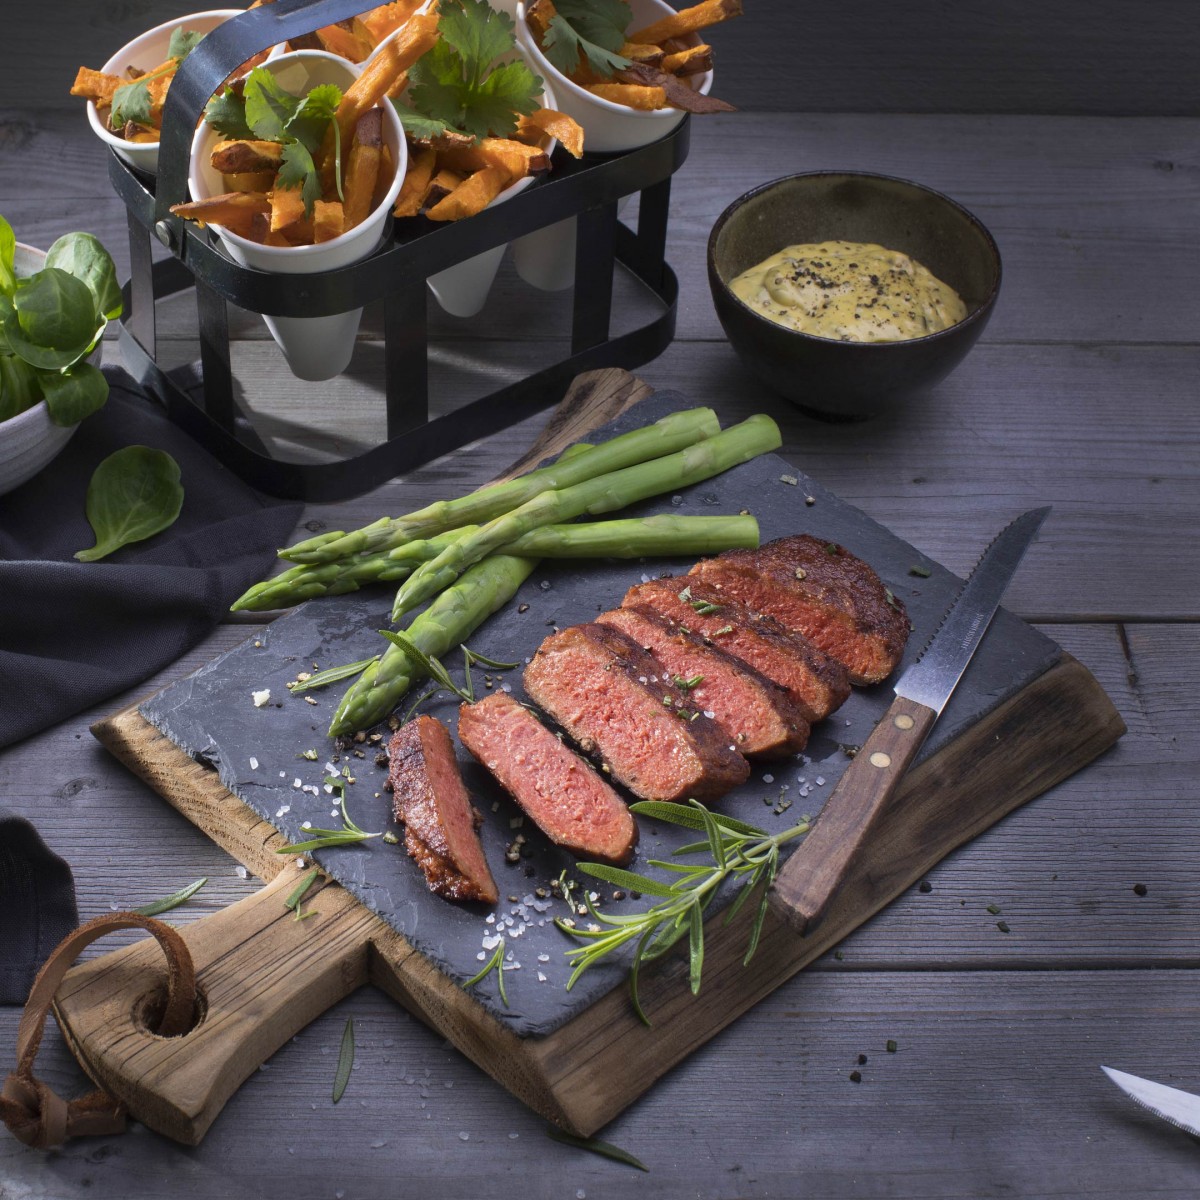 Maker of Hit Tesco Vegan Steak Increases Production and Announces European Expansion